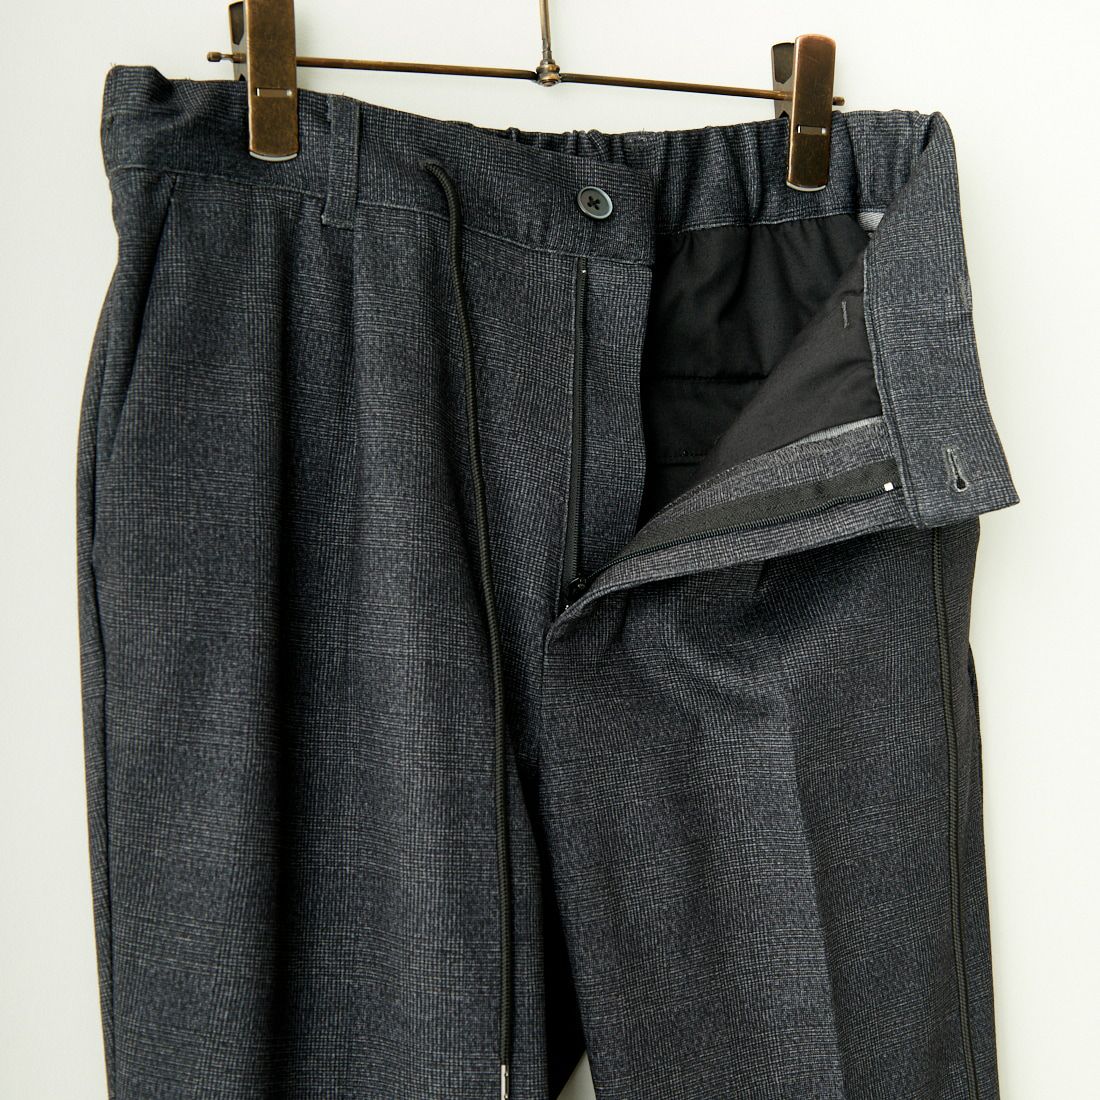 Jeans Factory Clothes [ジーンズファクトリークローズ] テックポンチ 1Pイージースラックス [JFC-242-017] 4 GRYｸﾞﾚﾝﾁ